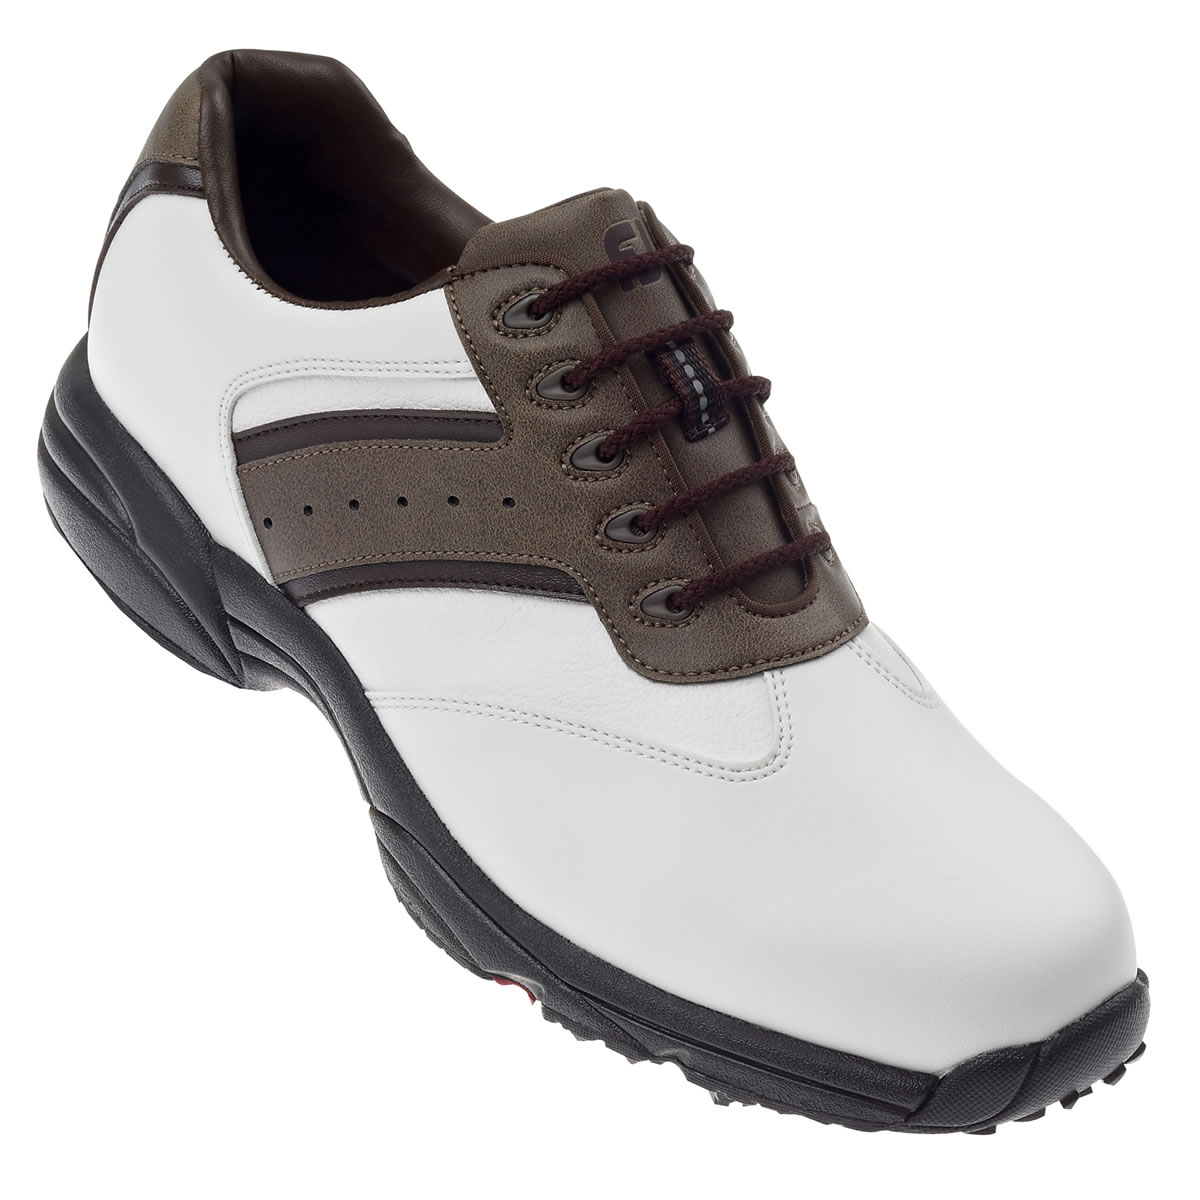 FootJoy GreenJoys Golf Shoes White/Brown #45406